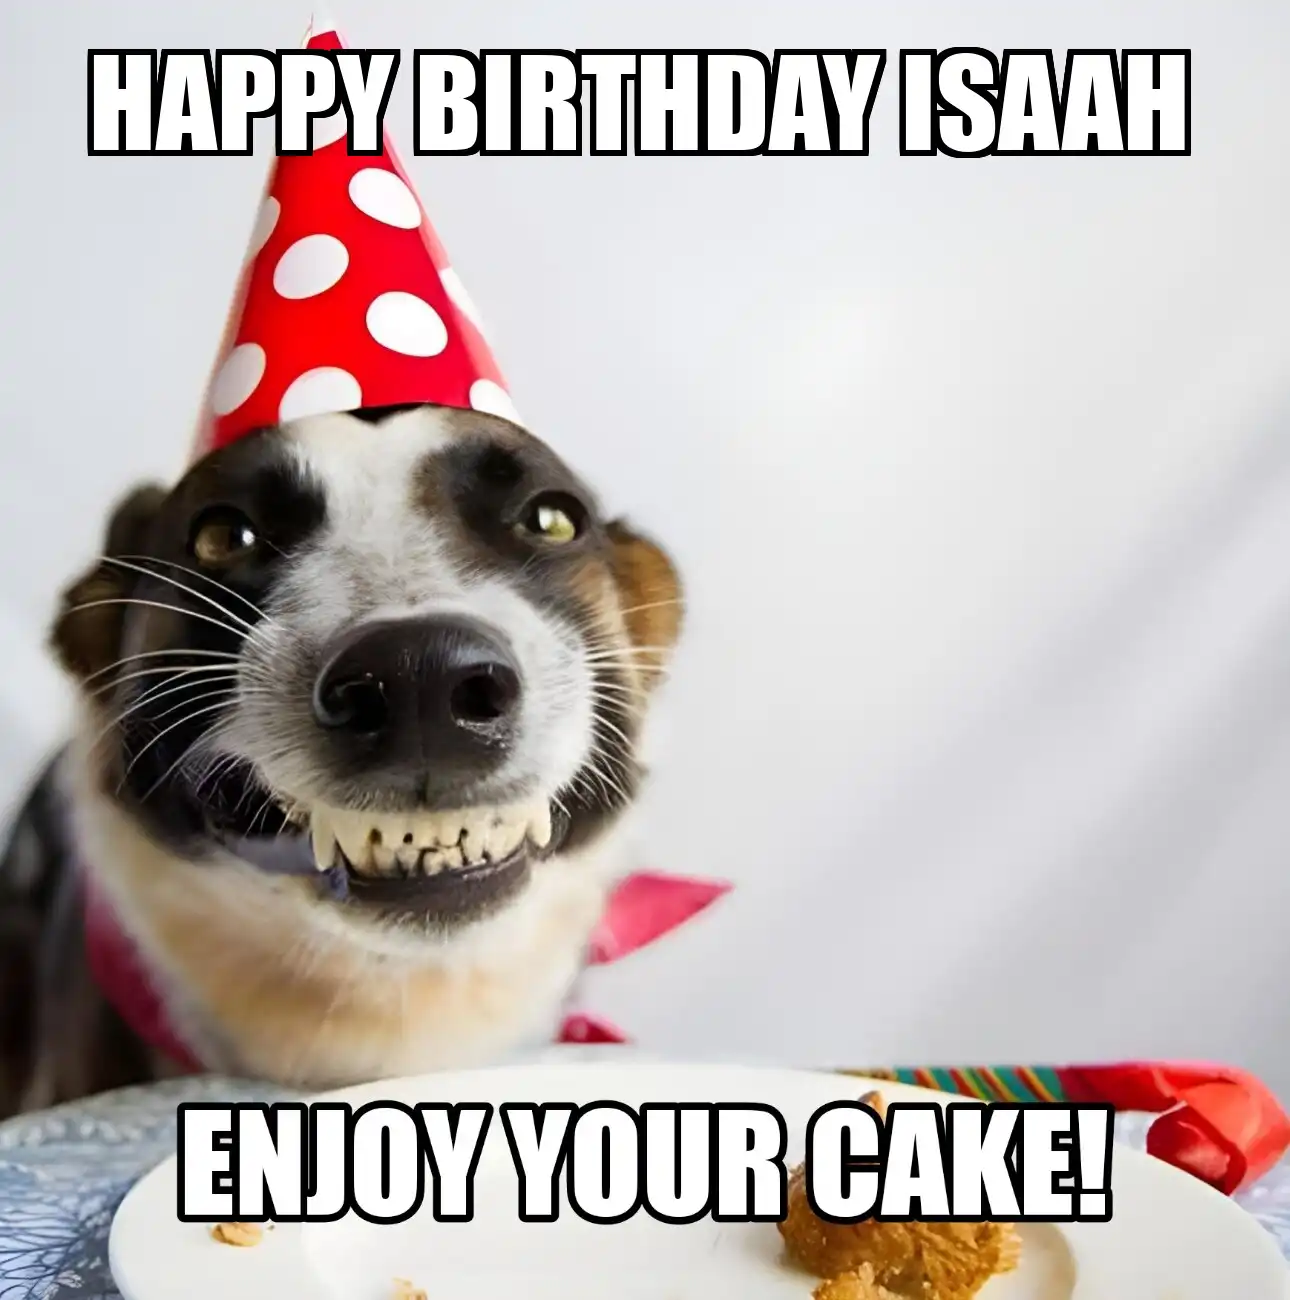 Happy Birthday Isaah Enjoy Your Cake Dog Meme